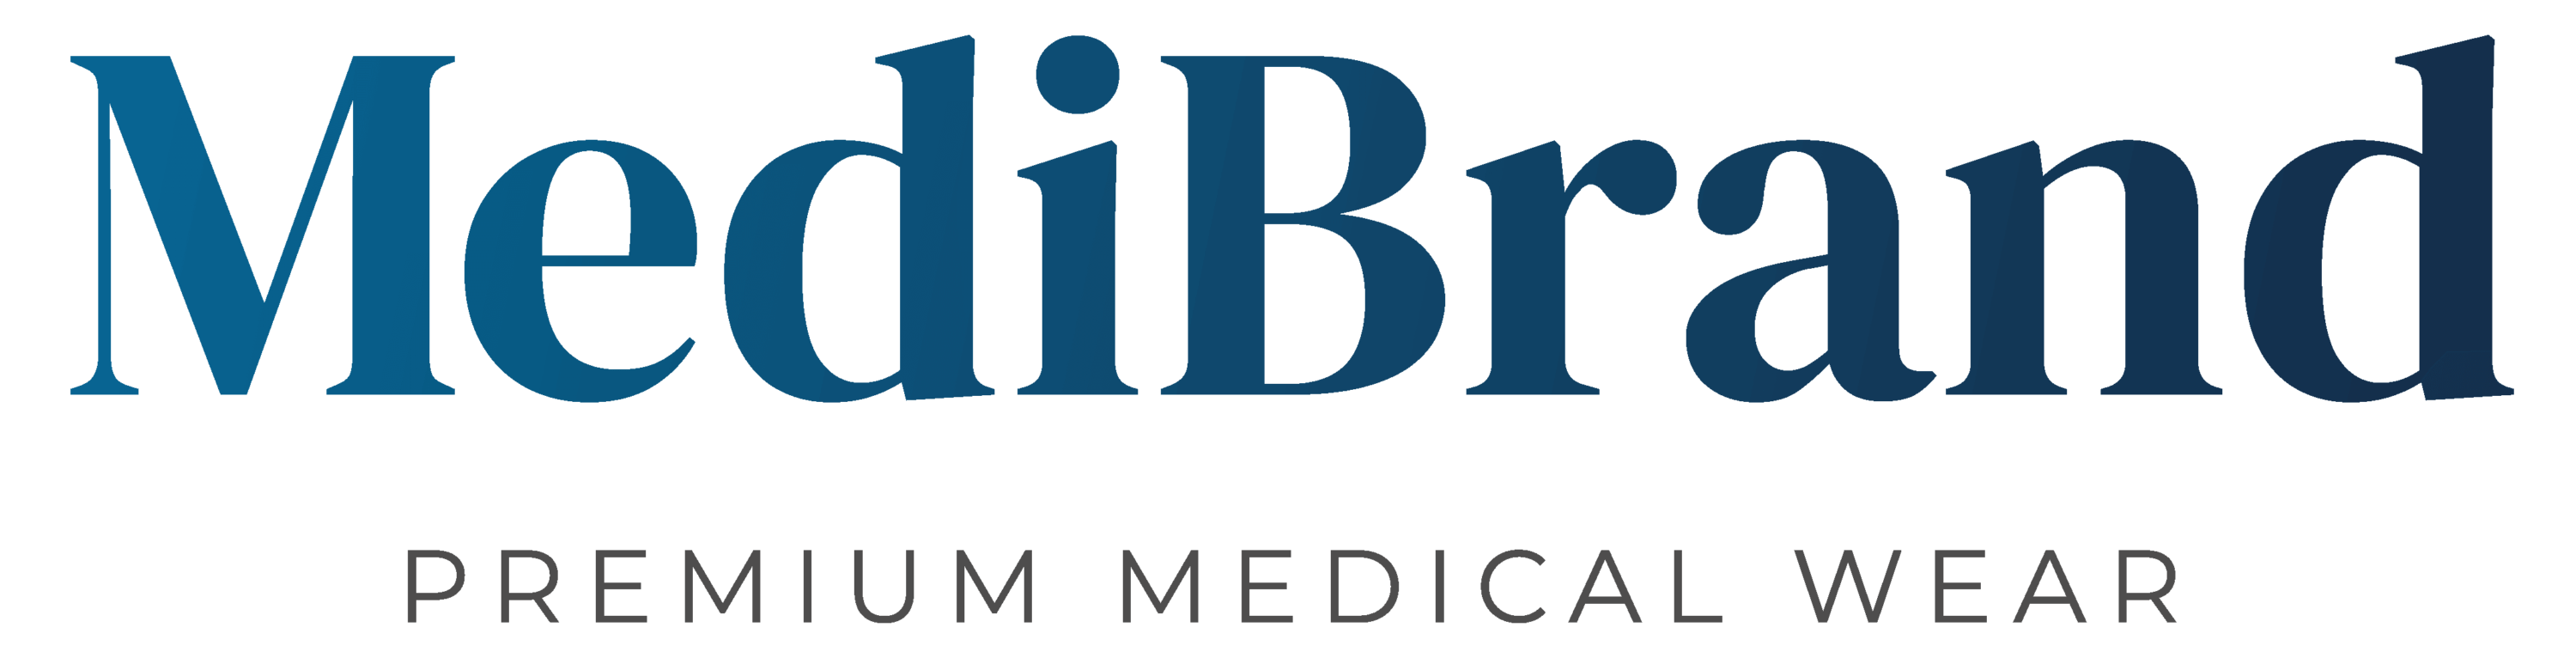 MediBrand - Premium Medical Wear